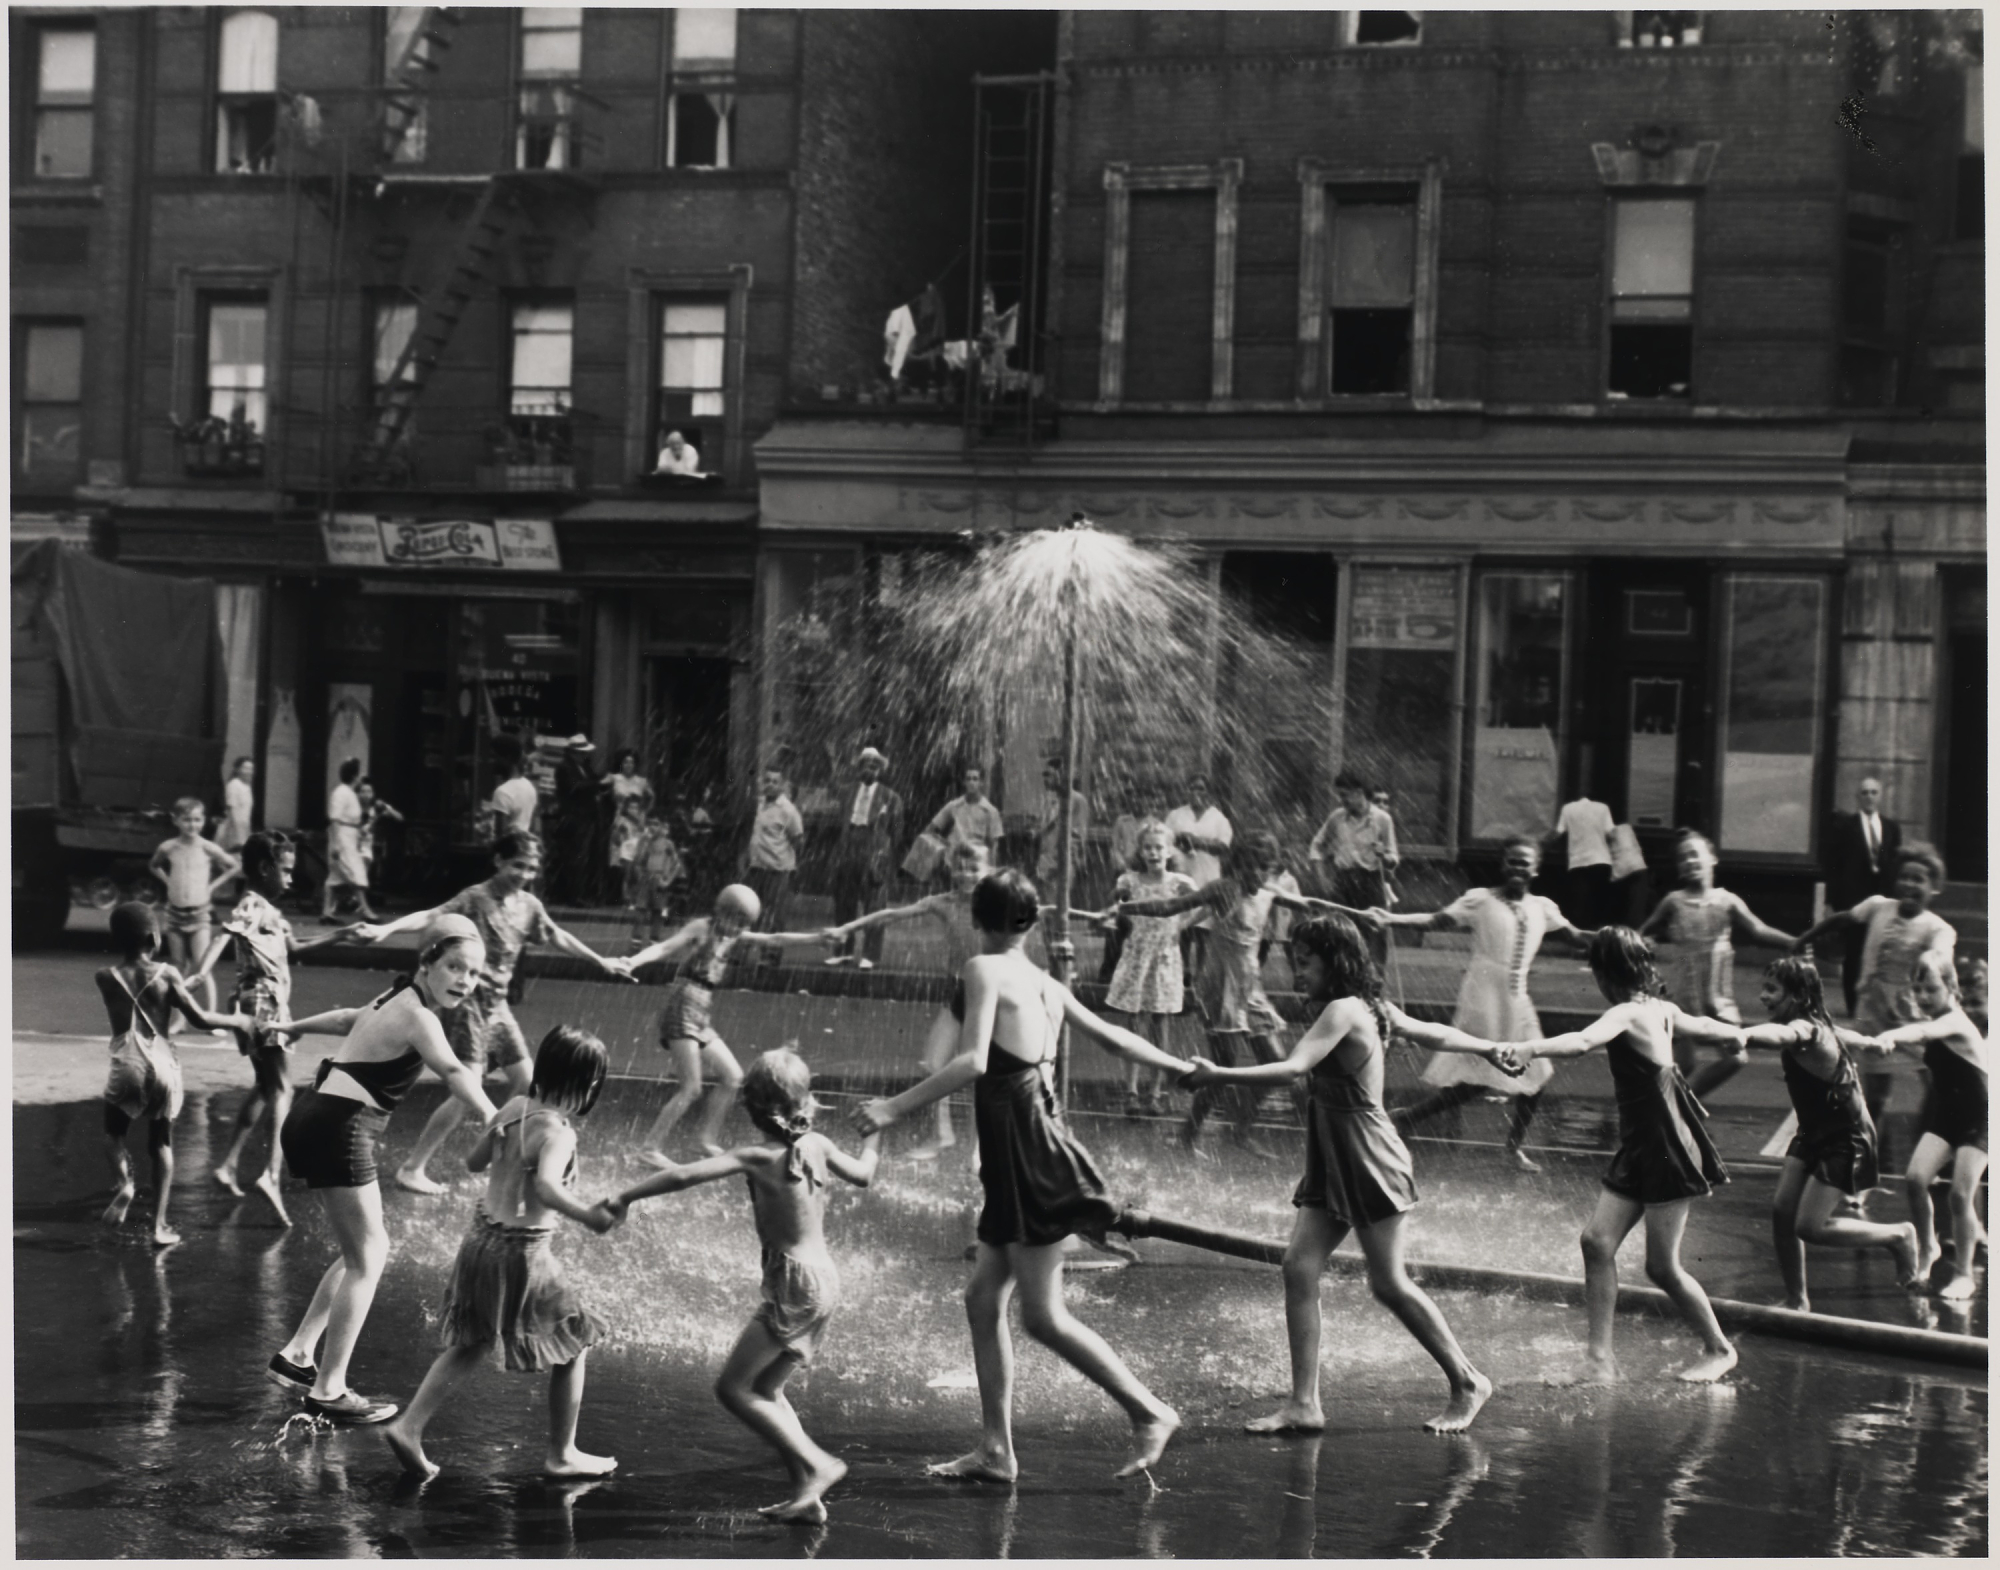 Todd Webb, "Children around Sprinkler, Harlem", 1946, gelatin silver print, Smithsonian American Art Museum